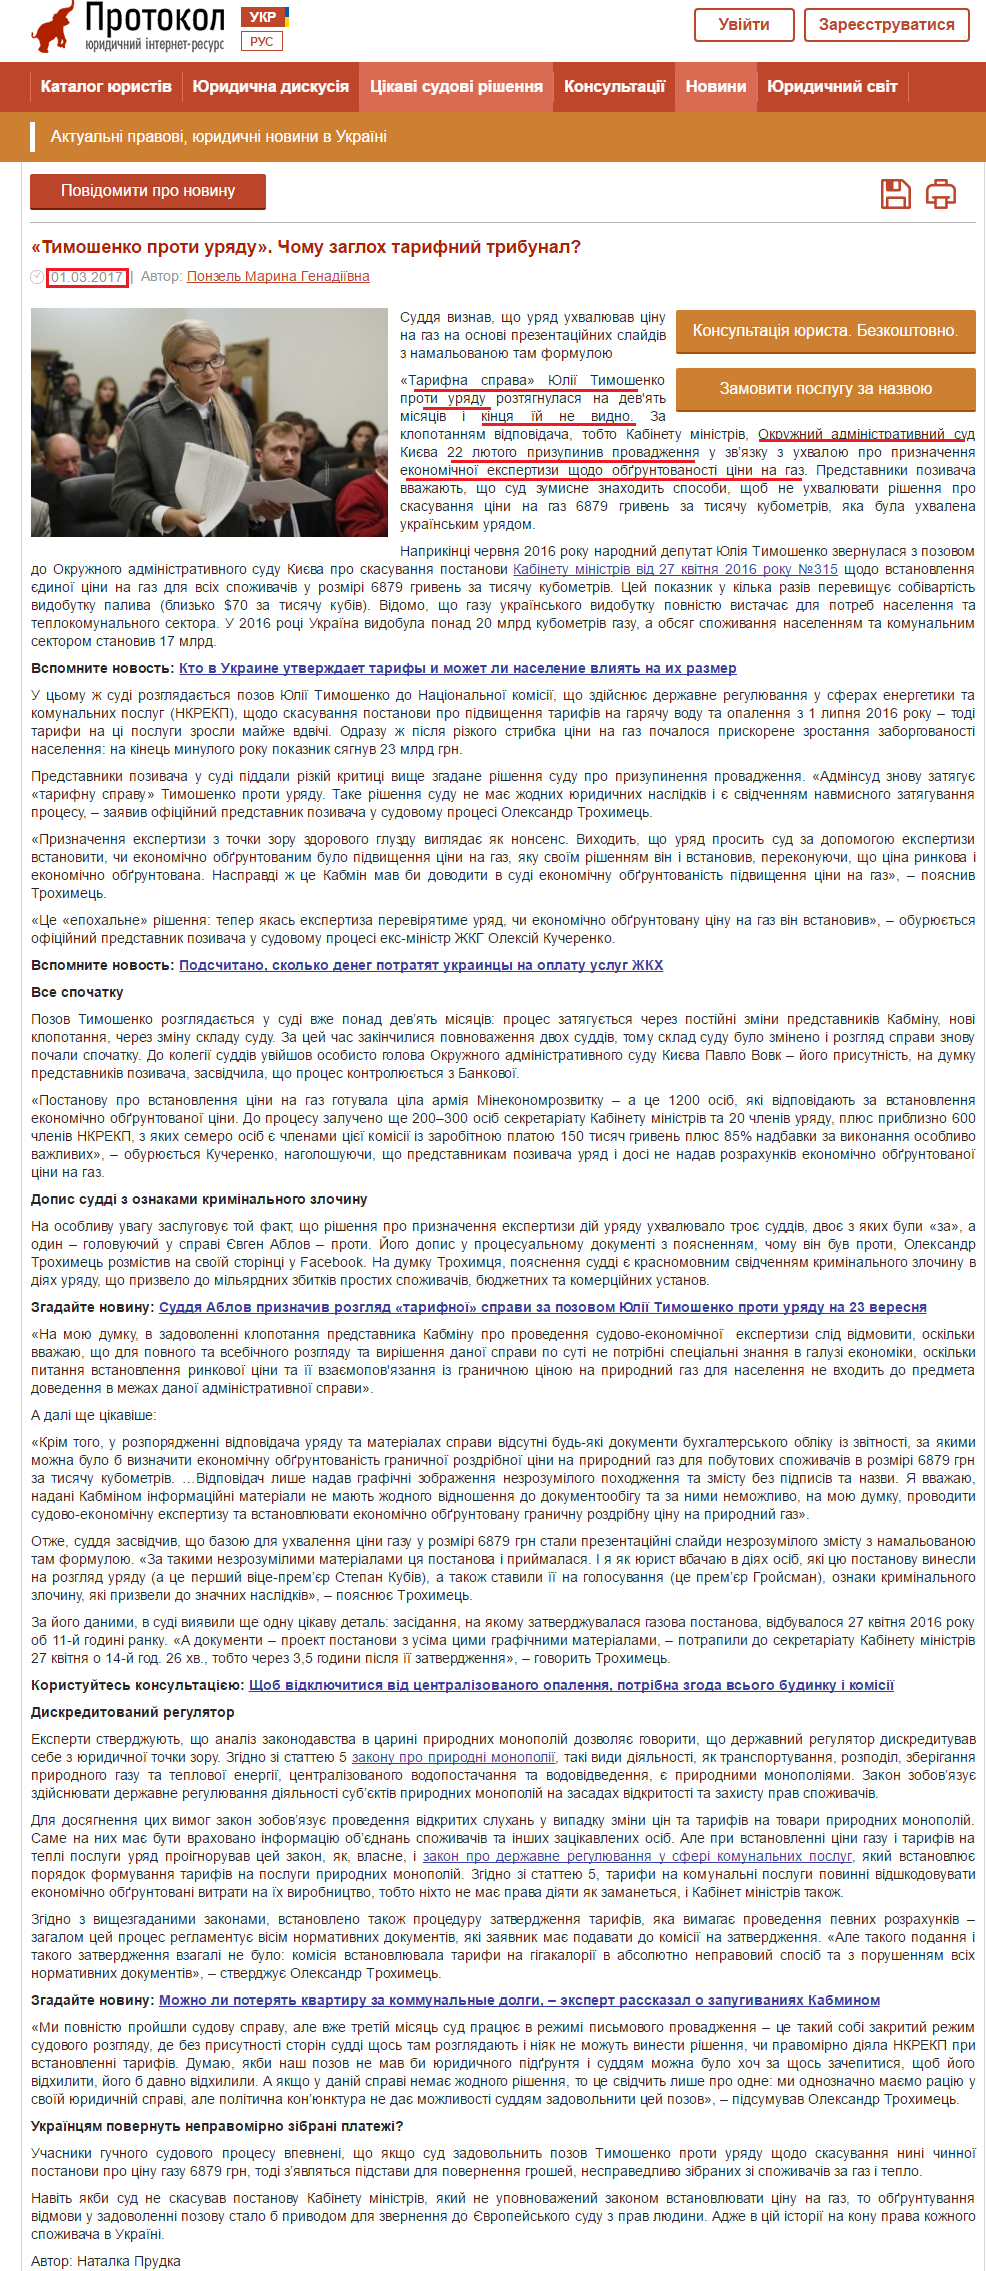 http://protokol.com.ua/ua/timoshenko_proti_uryadu_chomu_zagloh_tarifniy_tribunal/